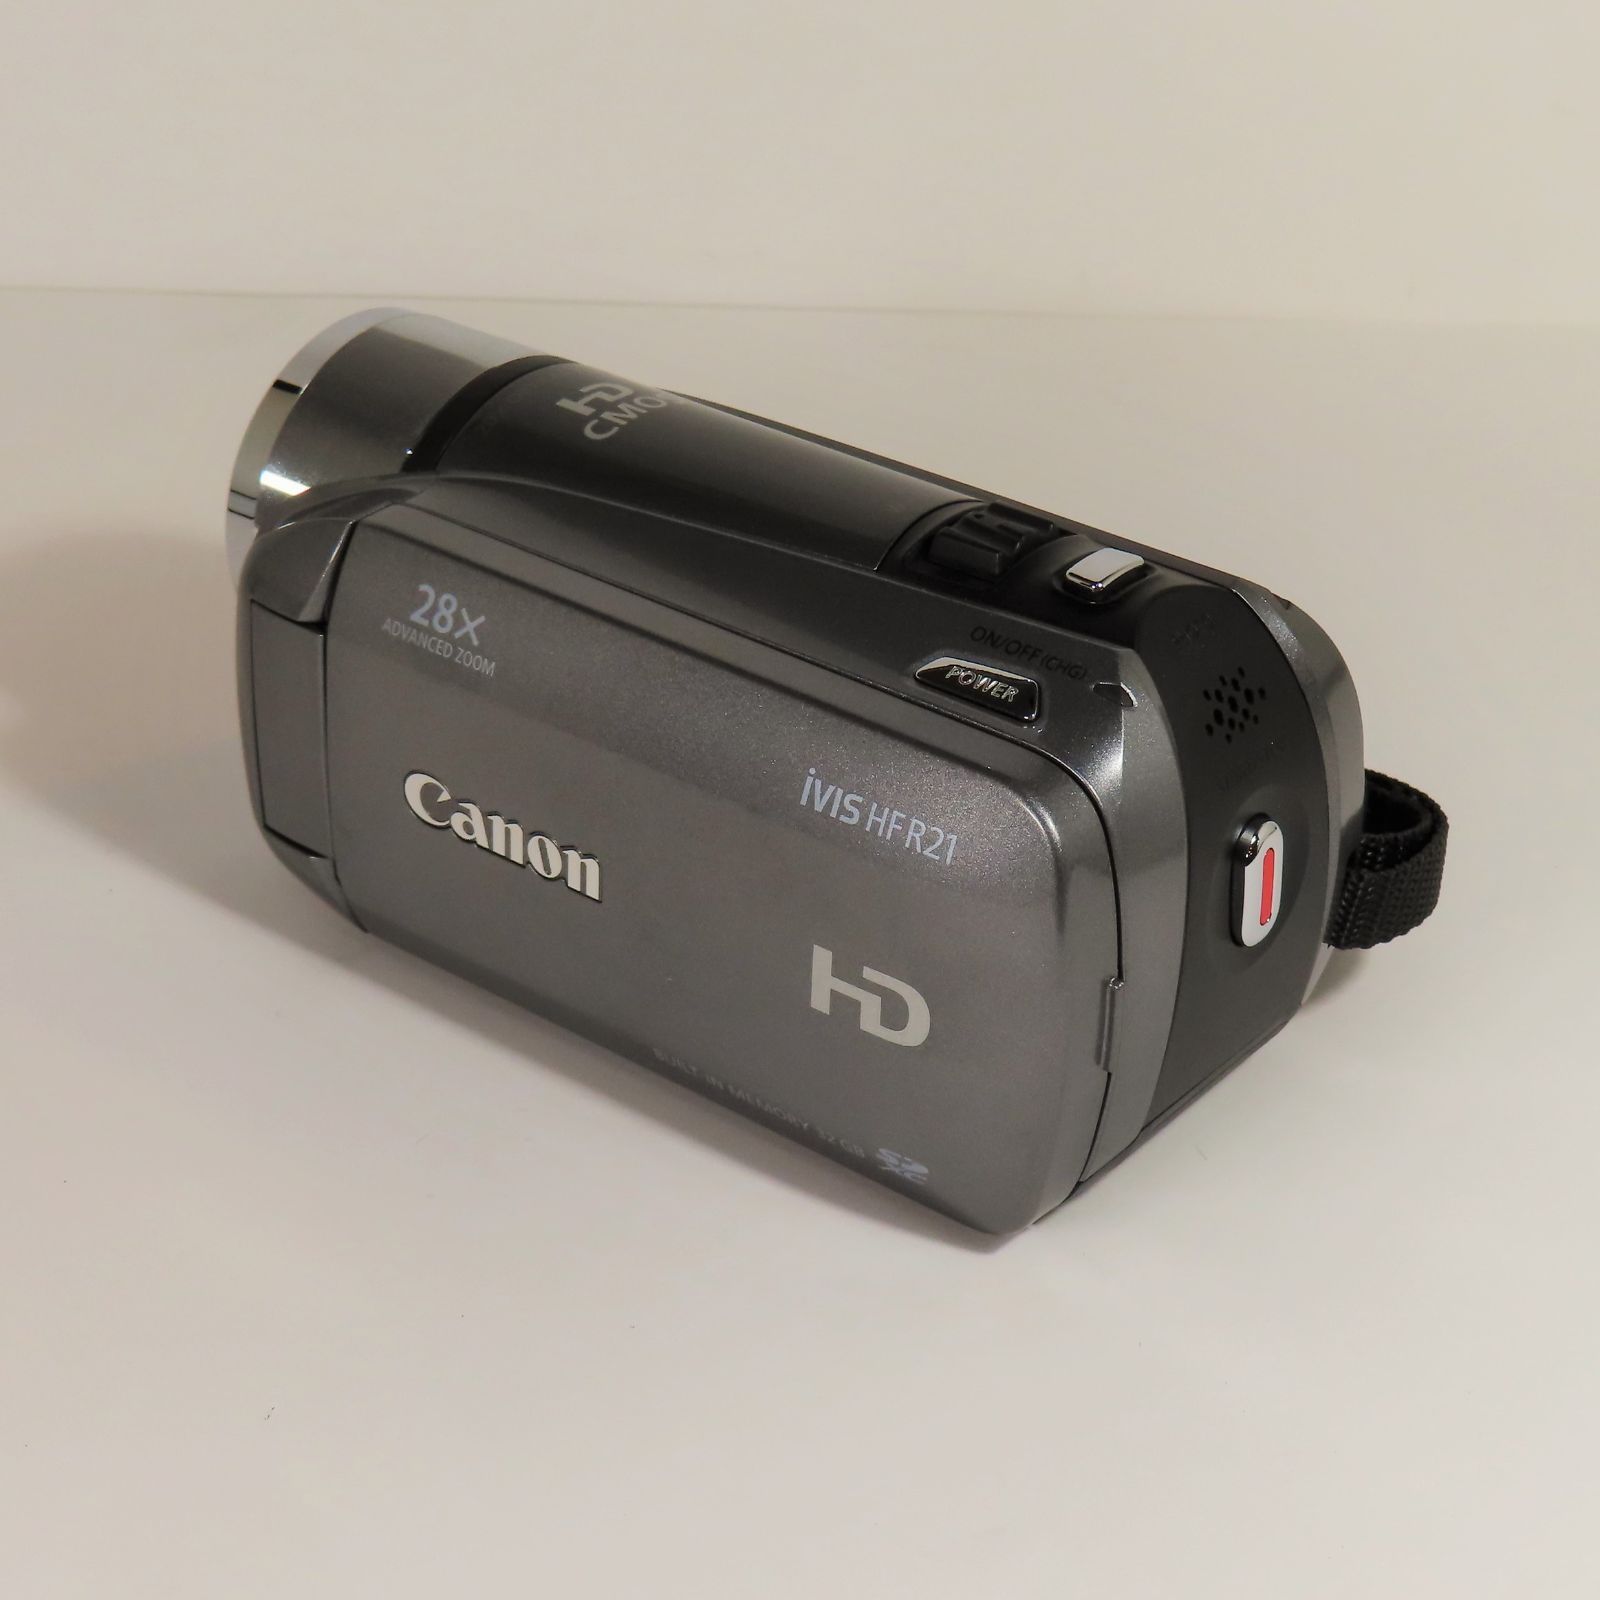 Canon キャノン デジタルビデオカメラ iVIS HF R21 レッド - ビデオカメラ